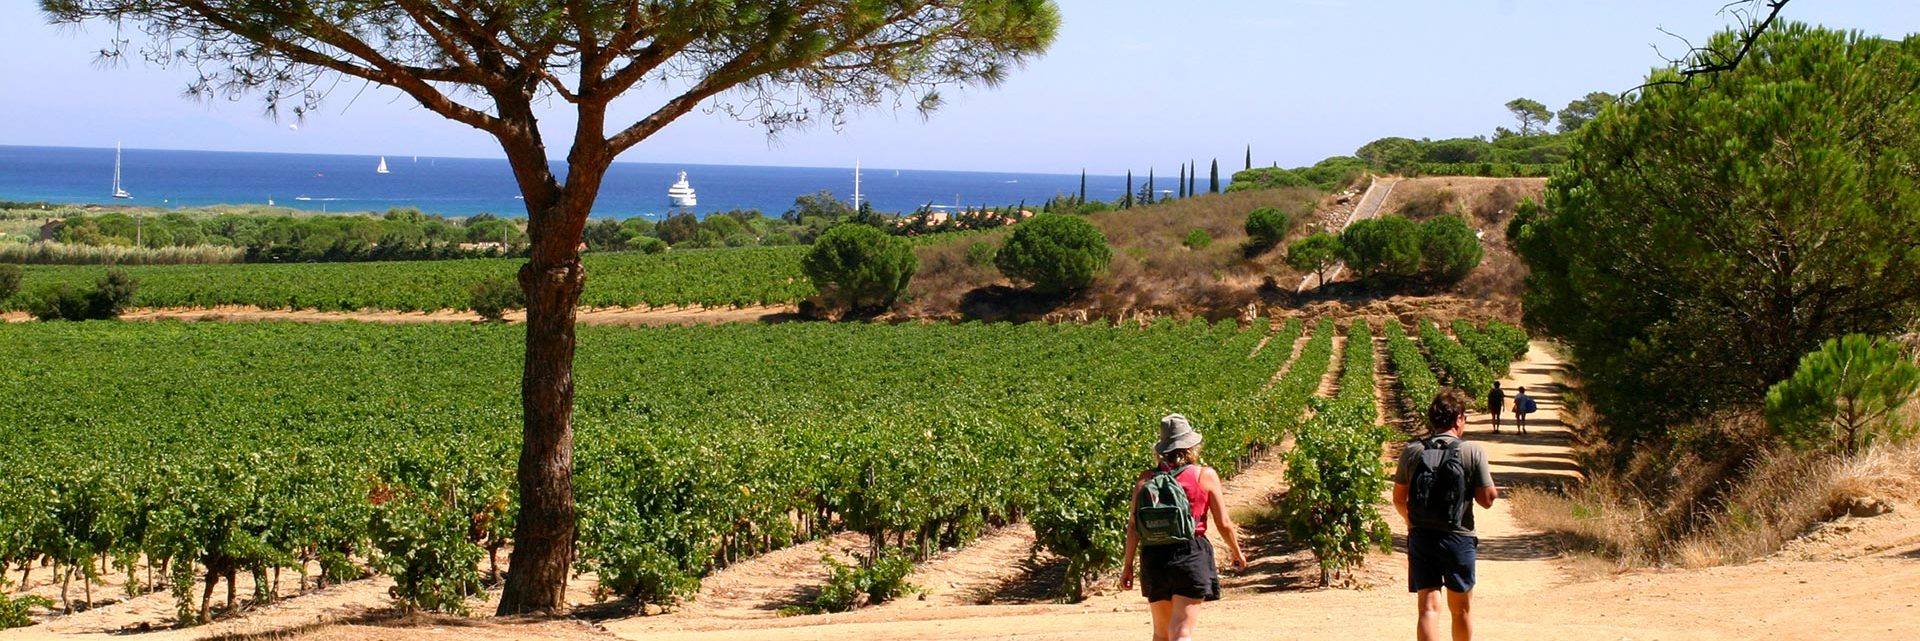 Walking between the vineyards and the sea - La Croix Valmer